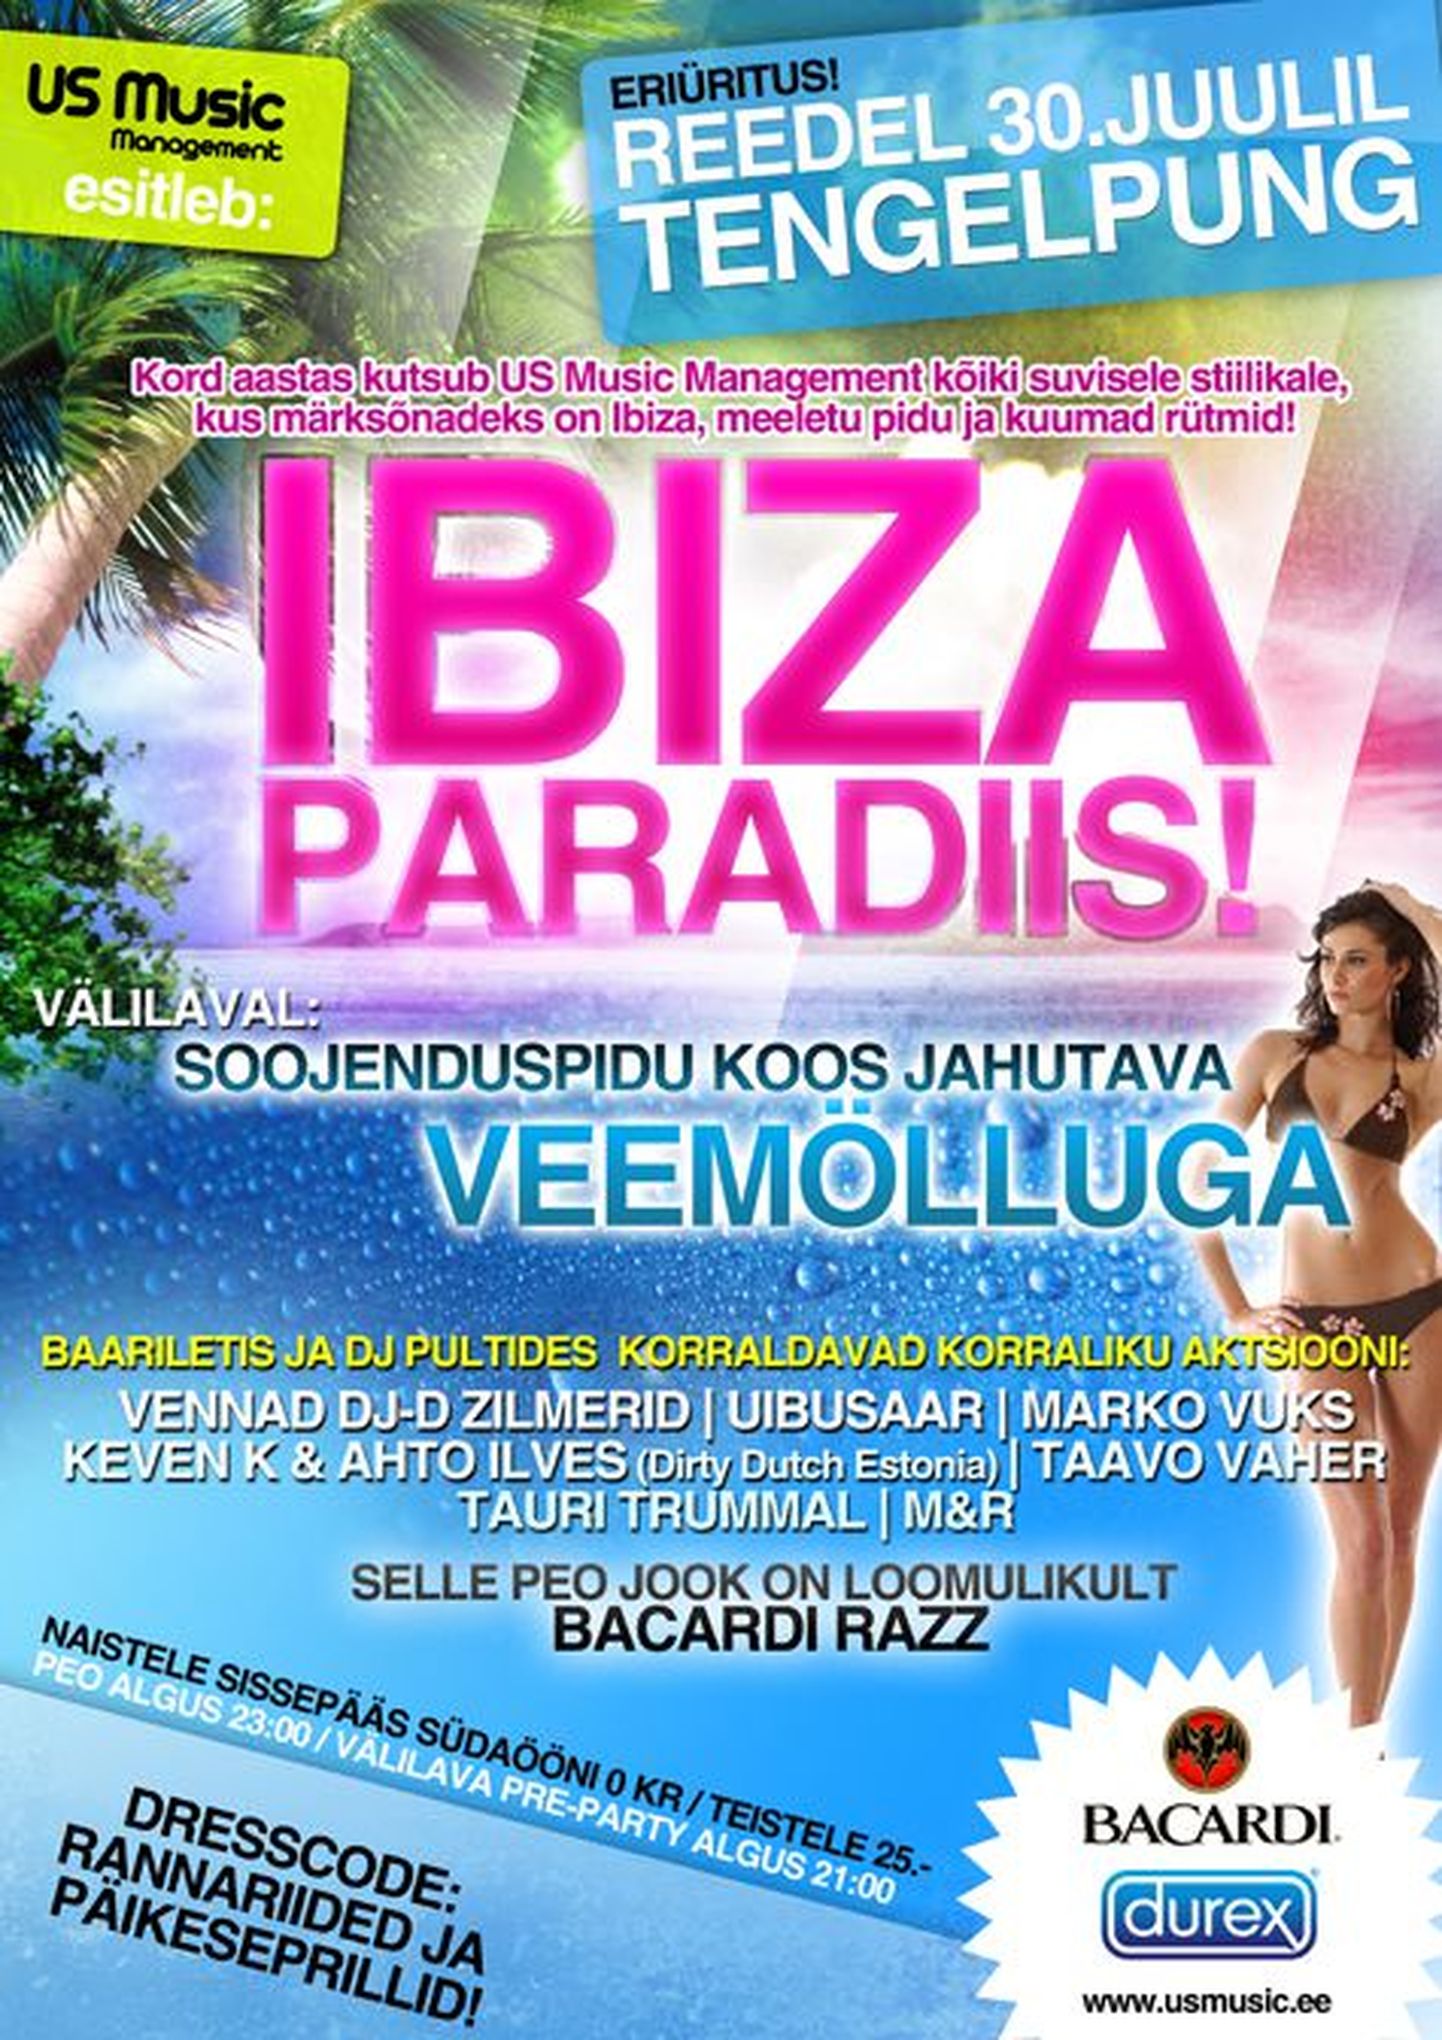 Reedel 30. juulil "Ibiza Paradiis" Tengelpungis!